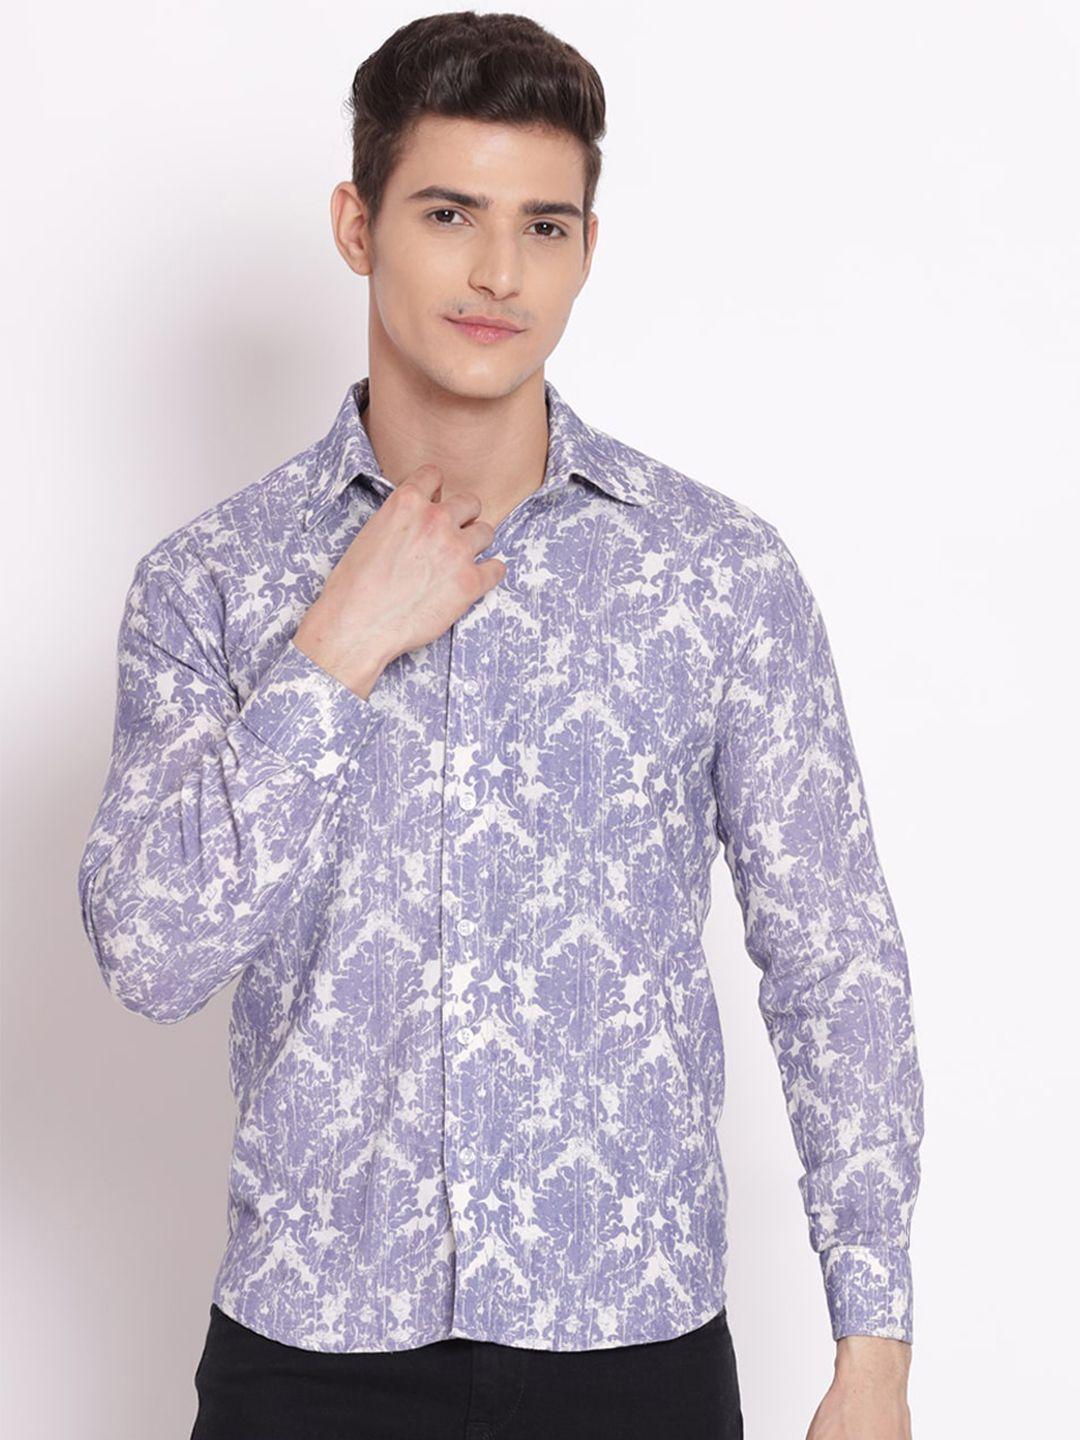 shurtz n skurtz men cotton straight floral printed casual shirt